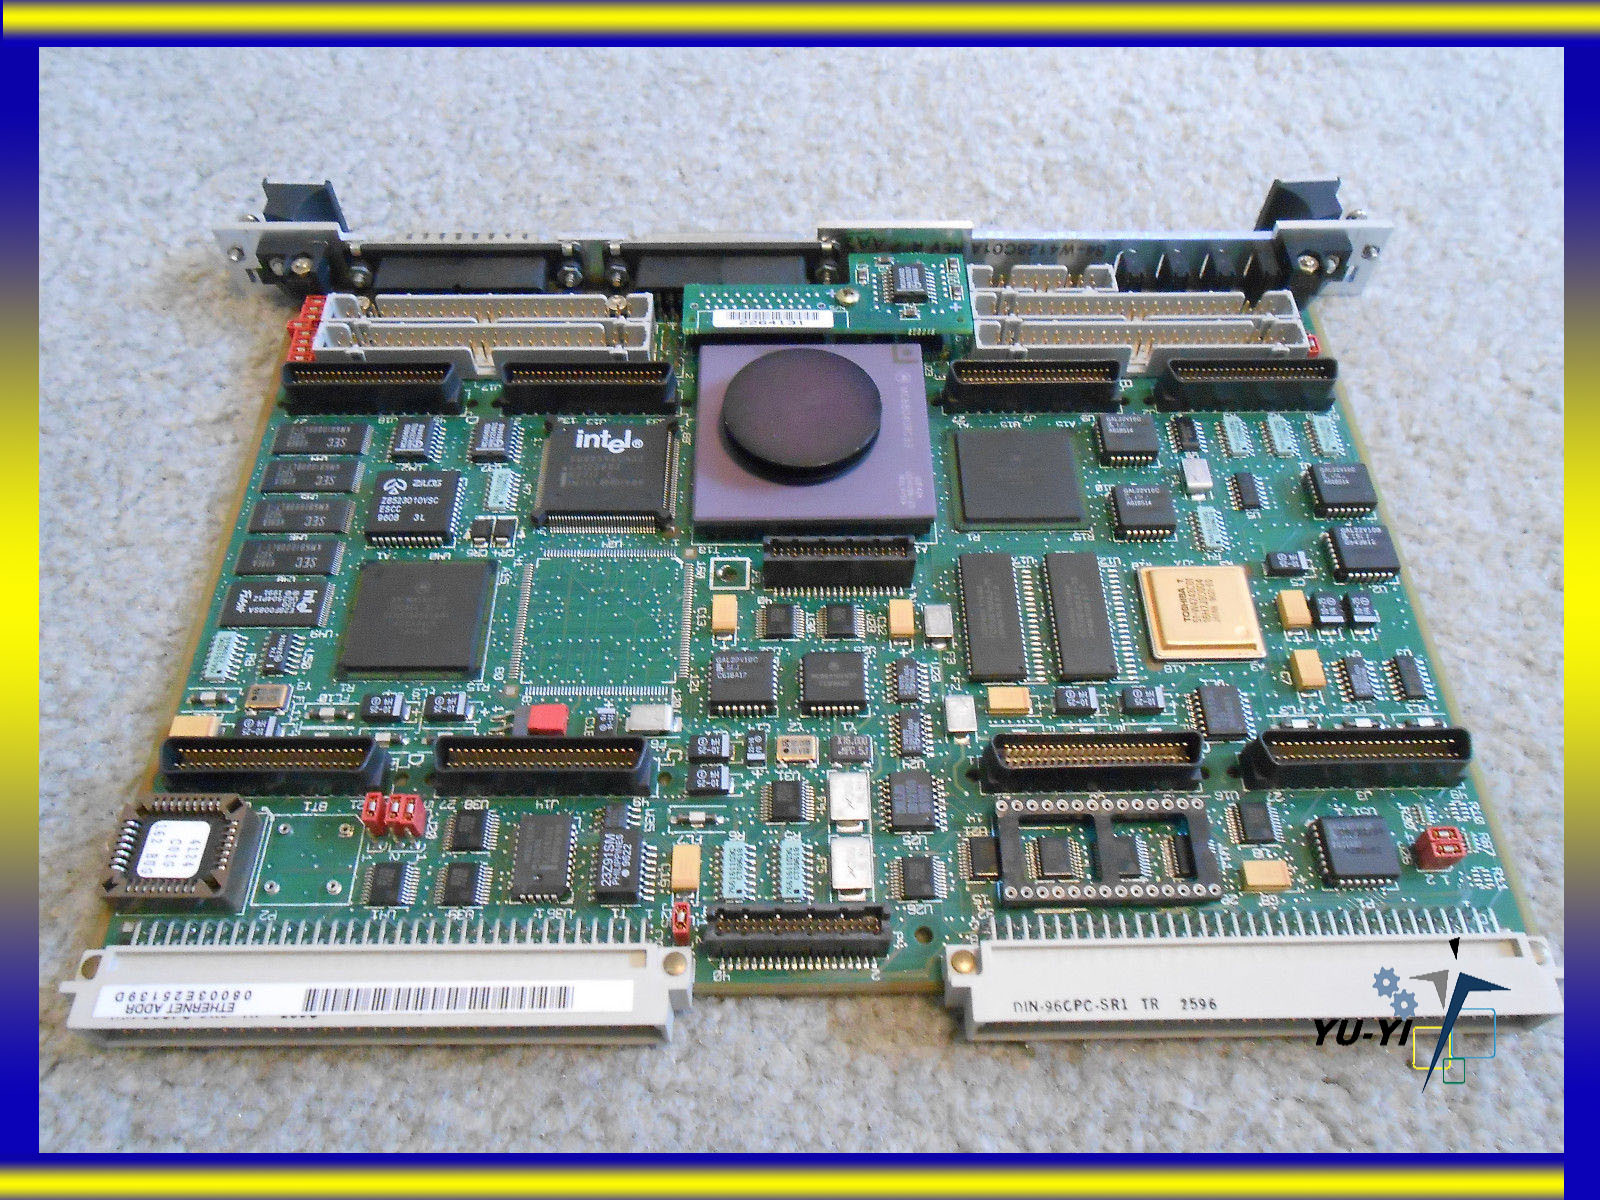 MOTOROLA MVME162-512A MC68040 CPU, 32MHZ, 4MB DRAM MEMORY, 512KB SRAM, 1MB FLASH